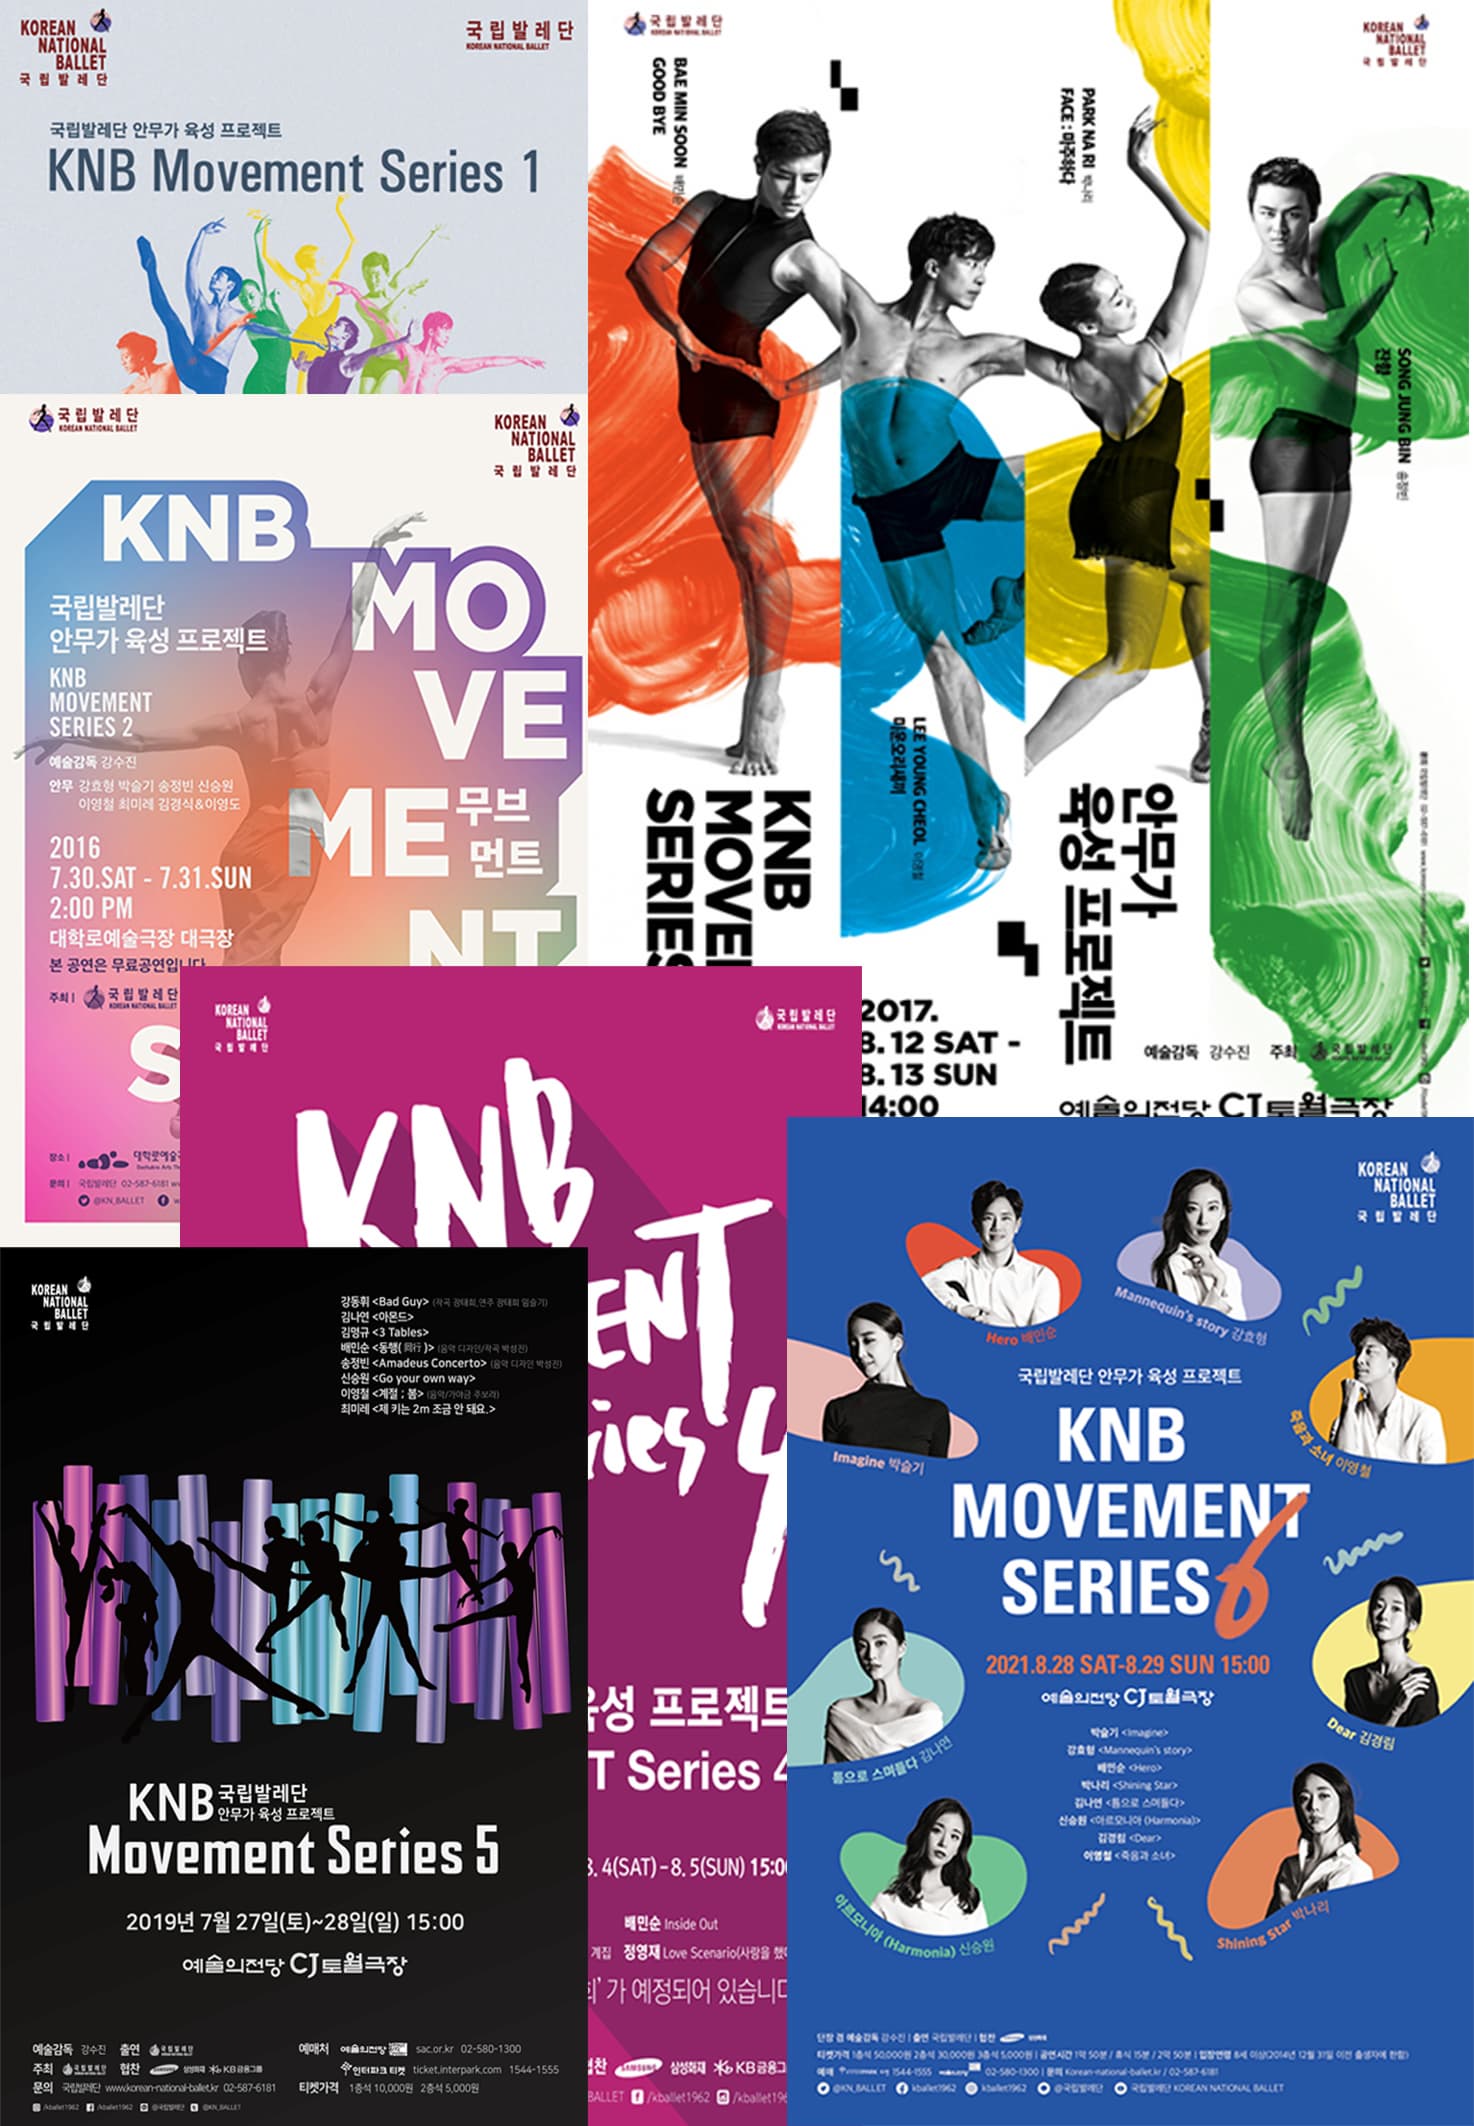 History of KNB Movement Series 2